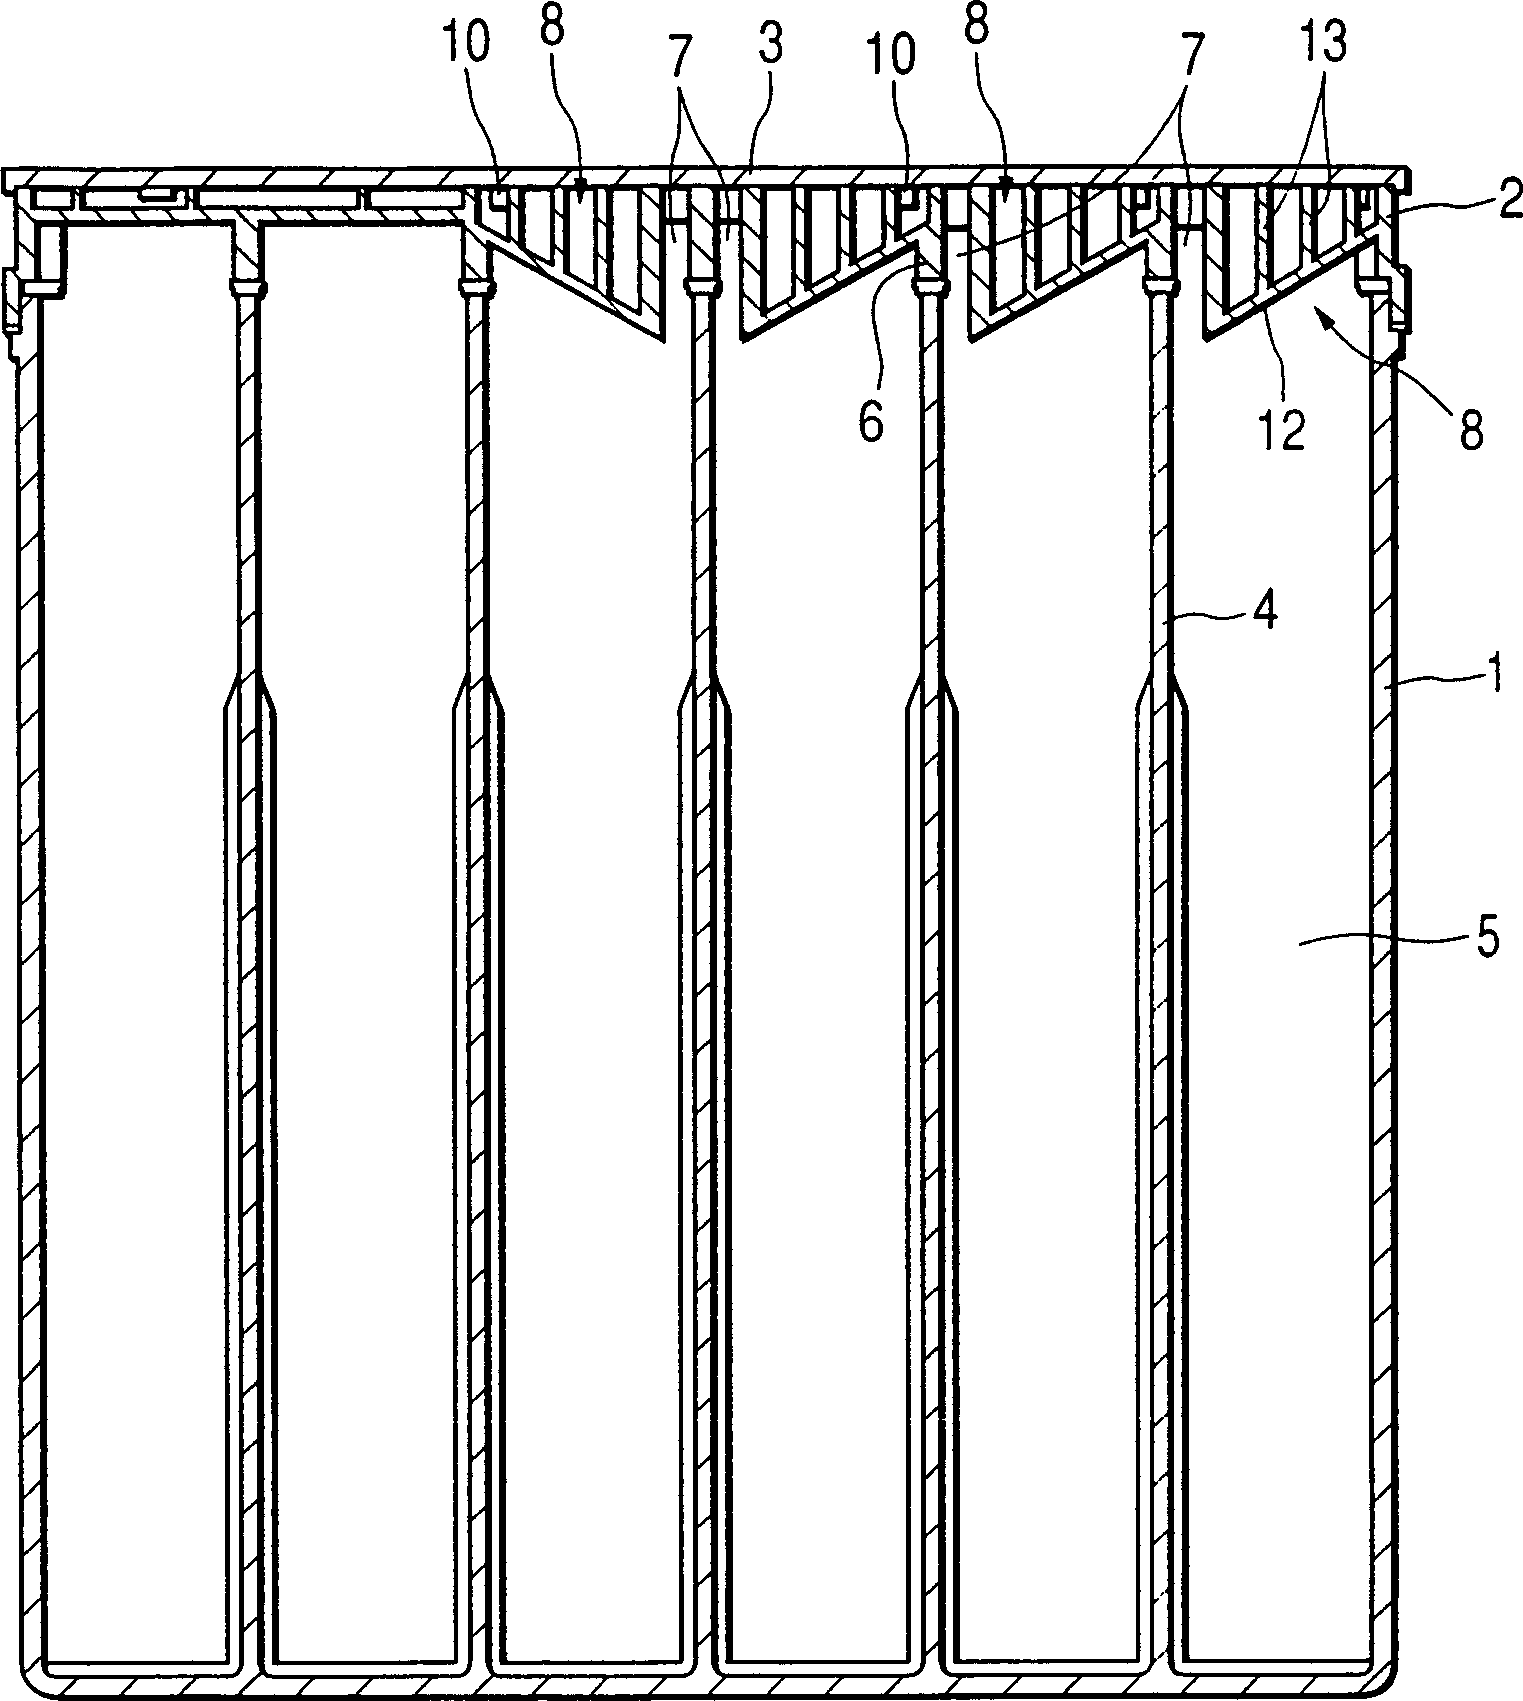 Exhaust structure of accumulator